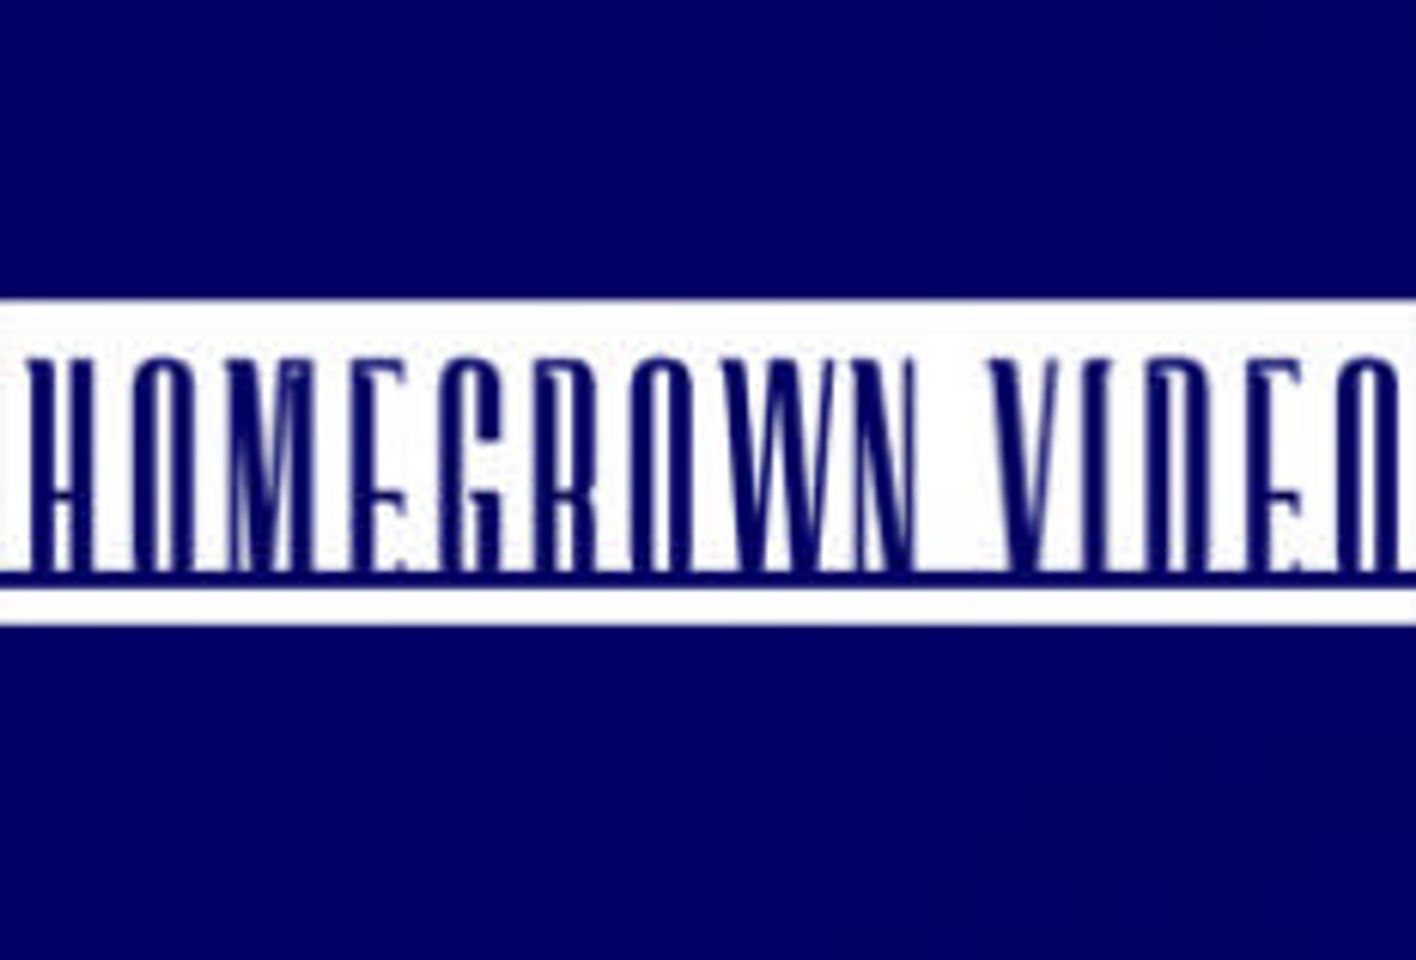 Homegrown Video Welcomes Mischief